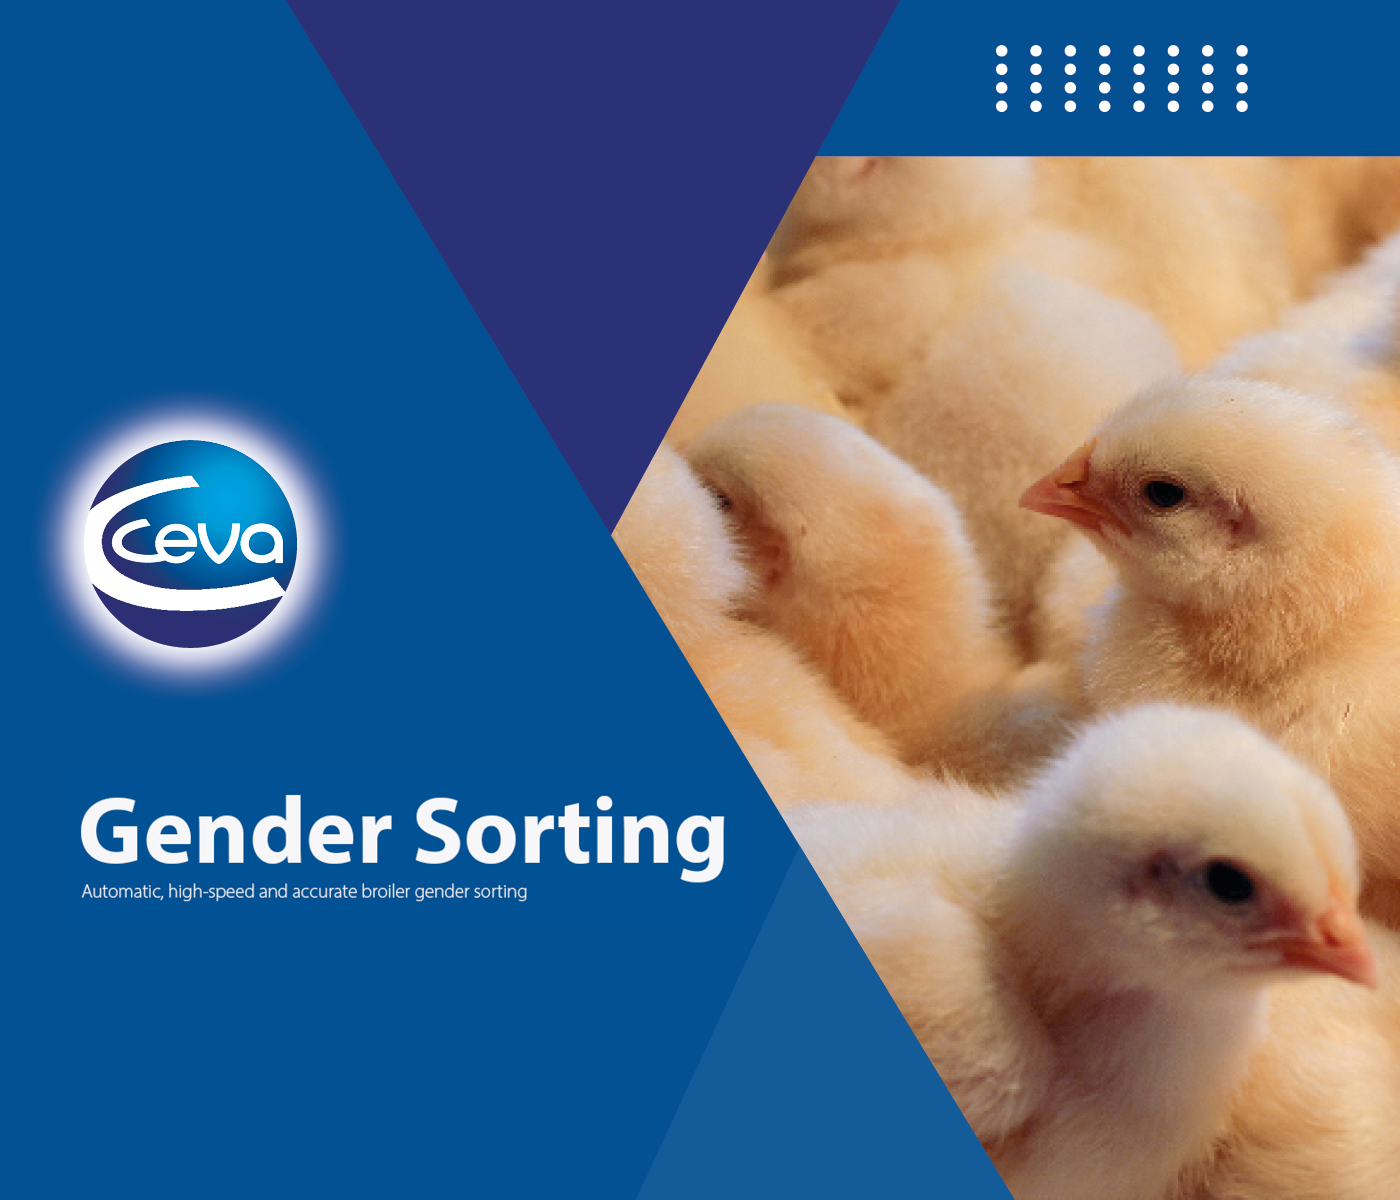 Ceva Santé Animale brings innovation at the hatchery with a...